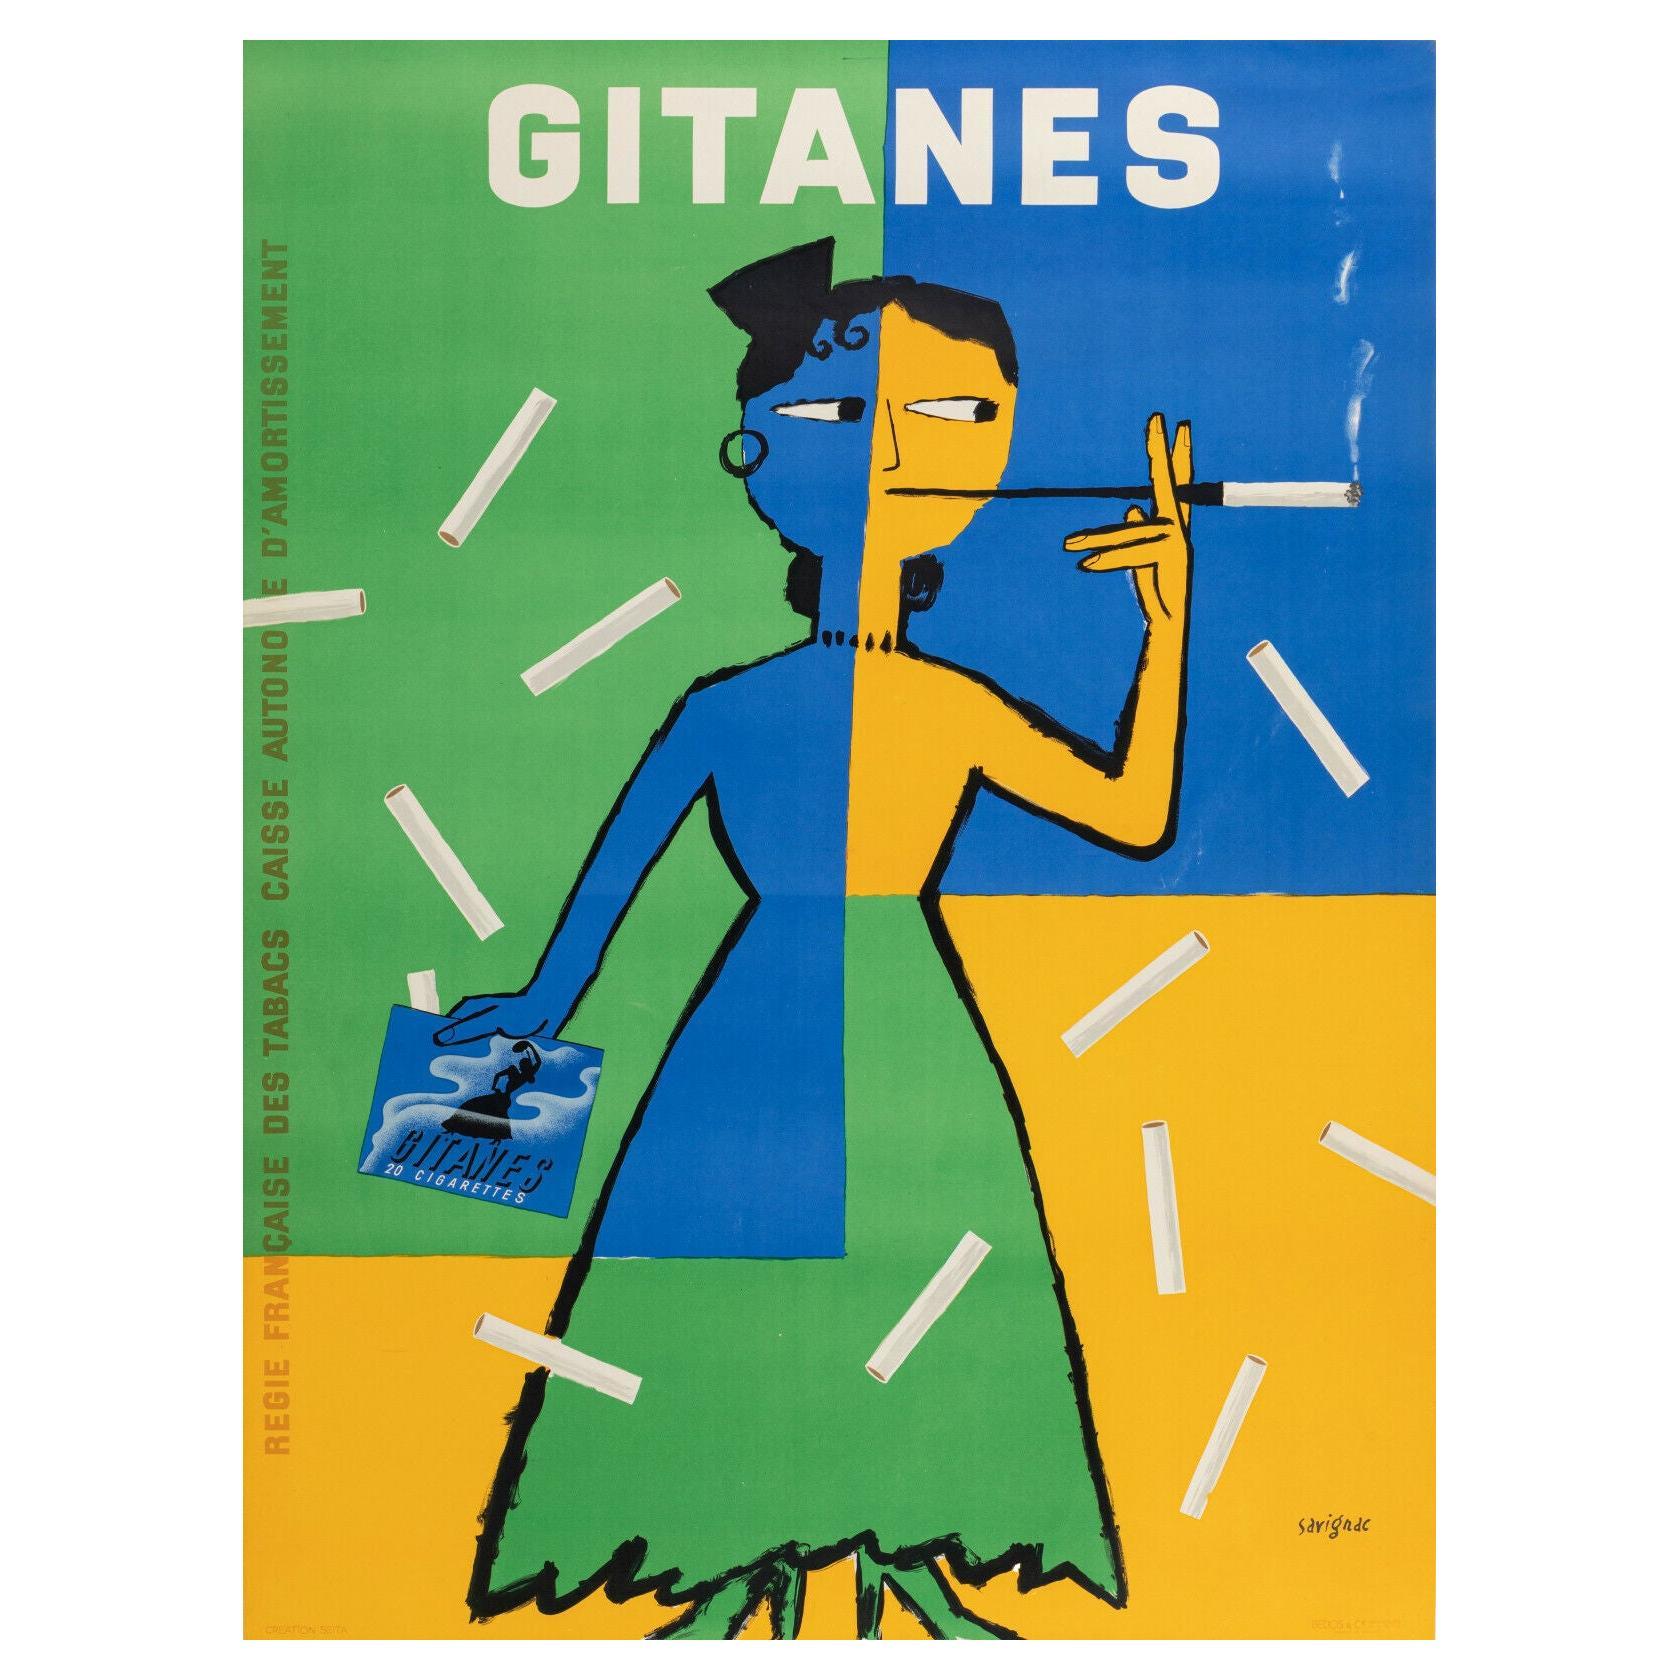 Original Vintage Poster-Raymond Savignac-Gitanes-Tobacco-Cigarette, 1953 For Sale